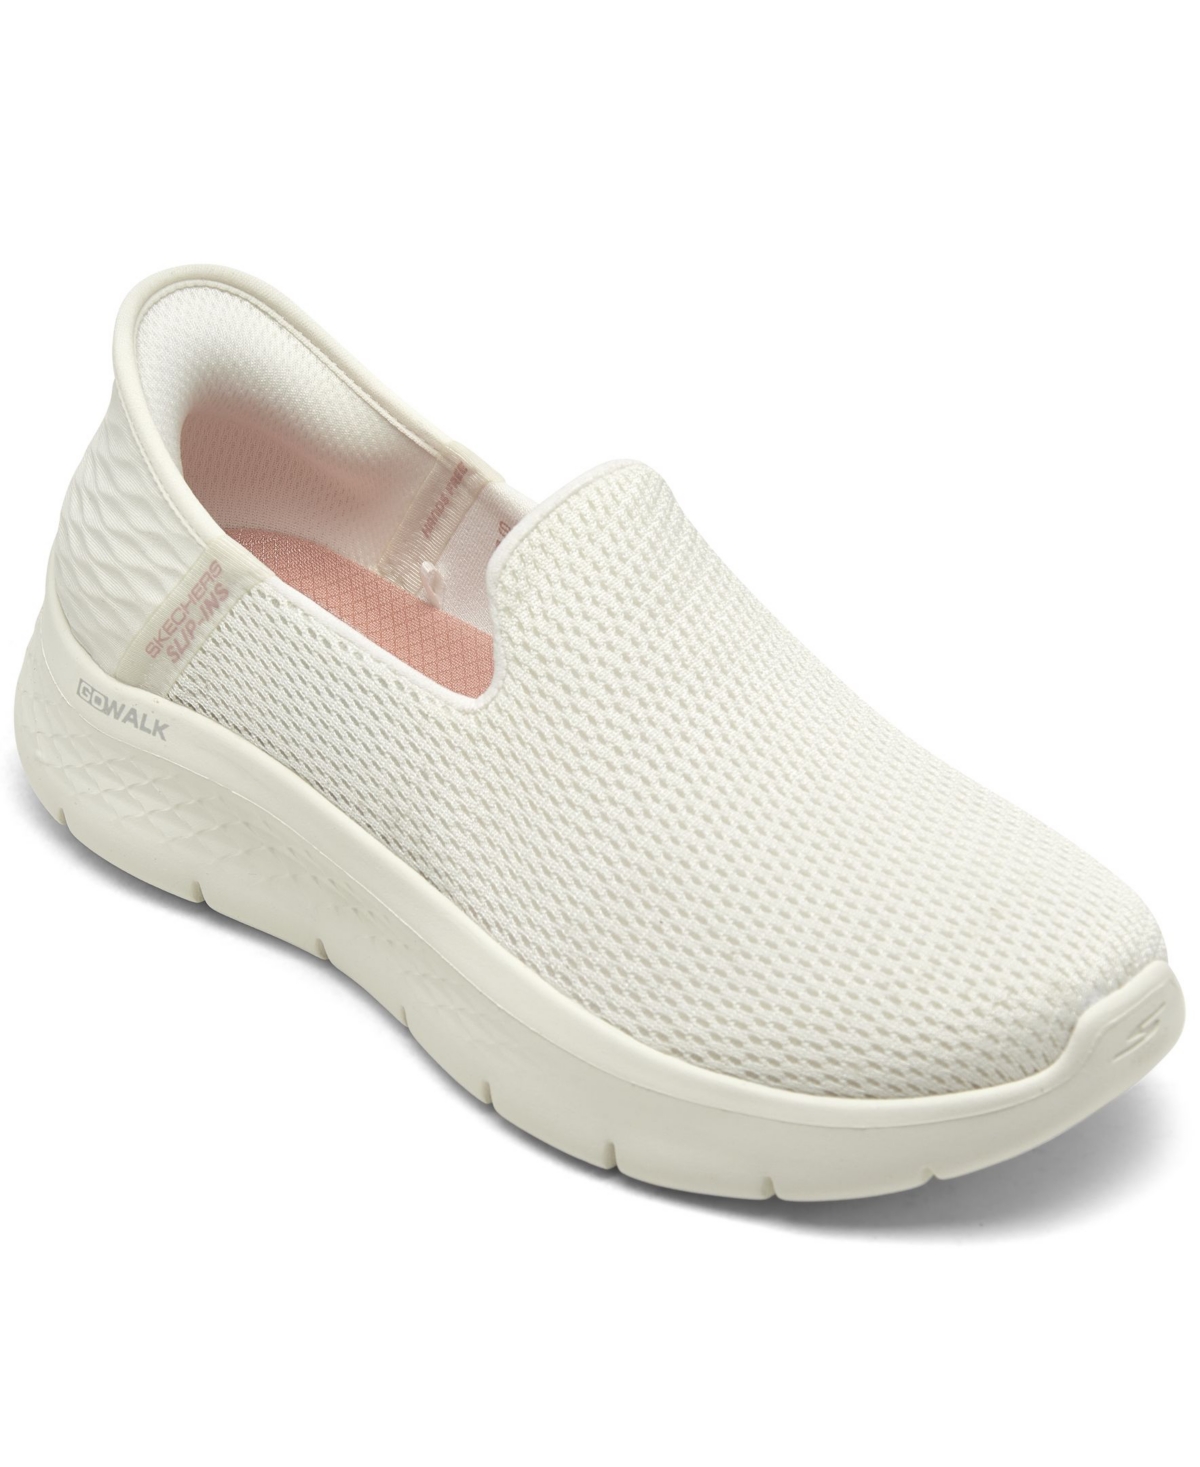 Women's Slip-Ins- Go Walk Flex - Relish Slip-On Walking Sneakers from Finish Line - Off White